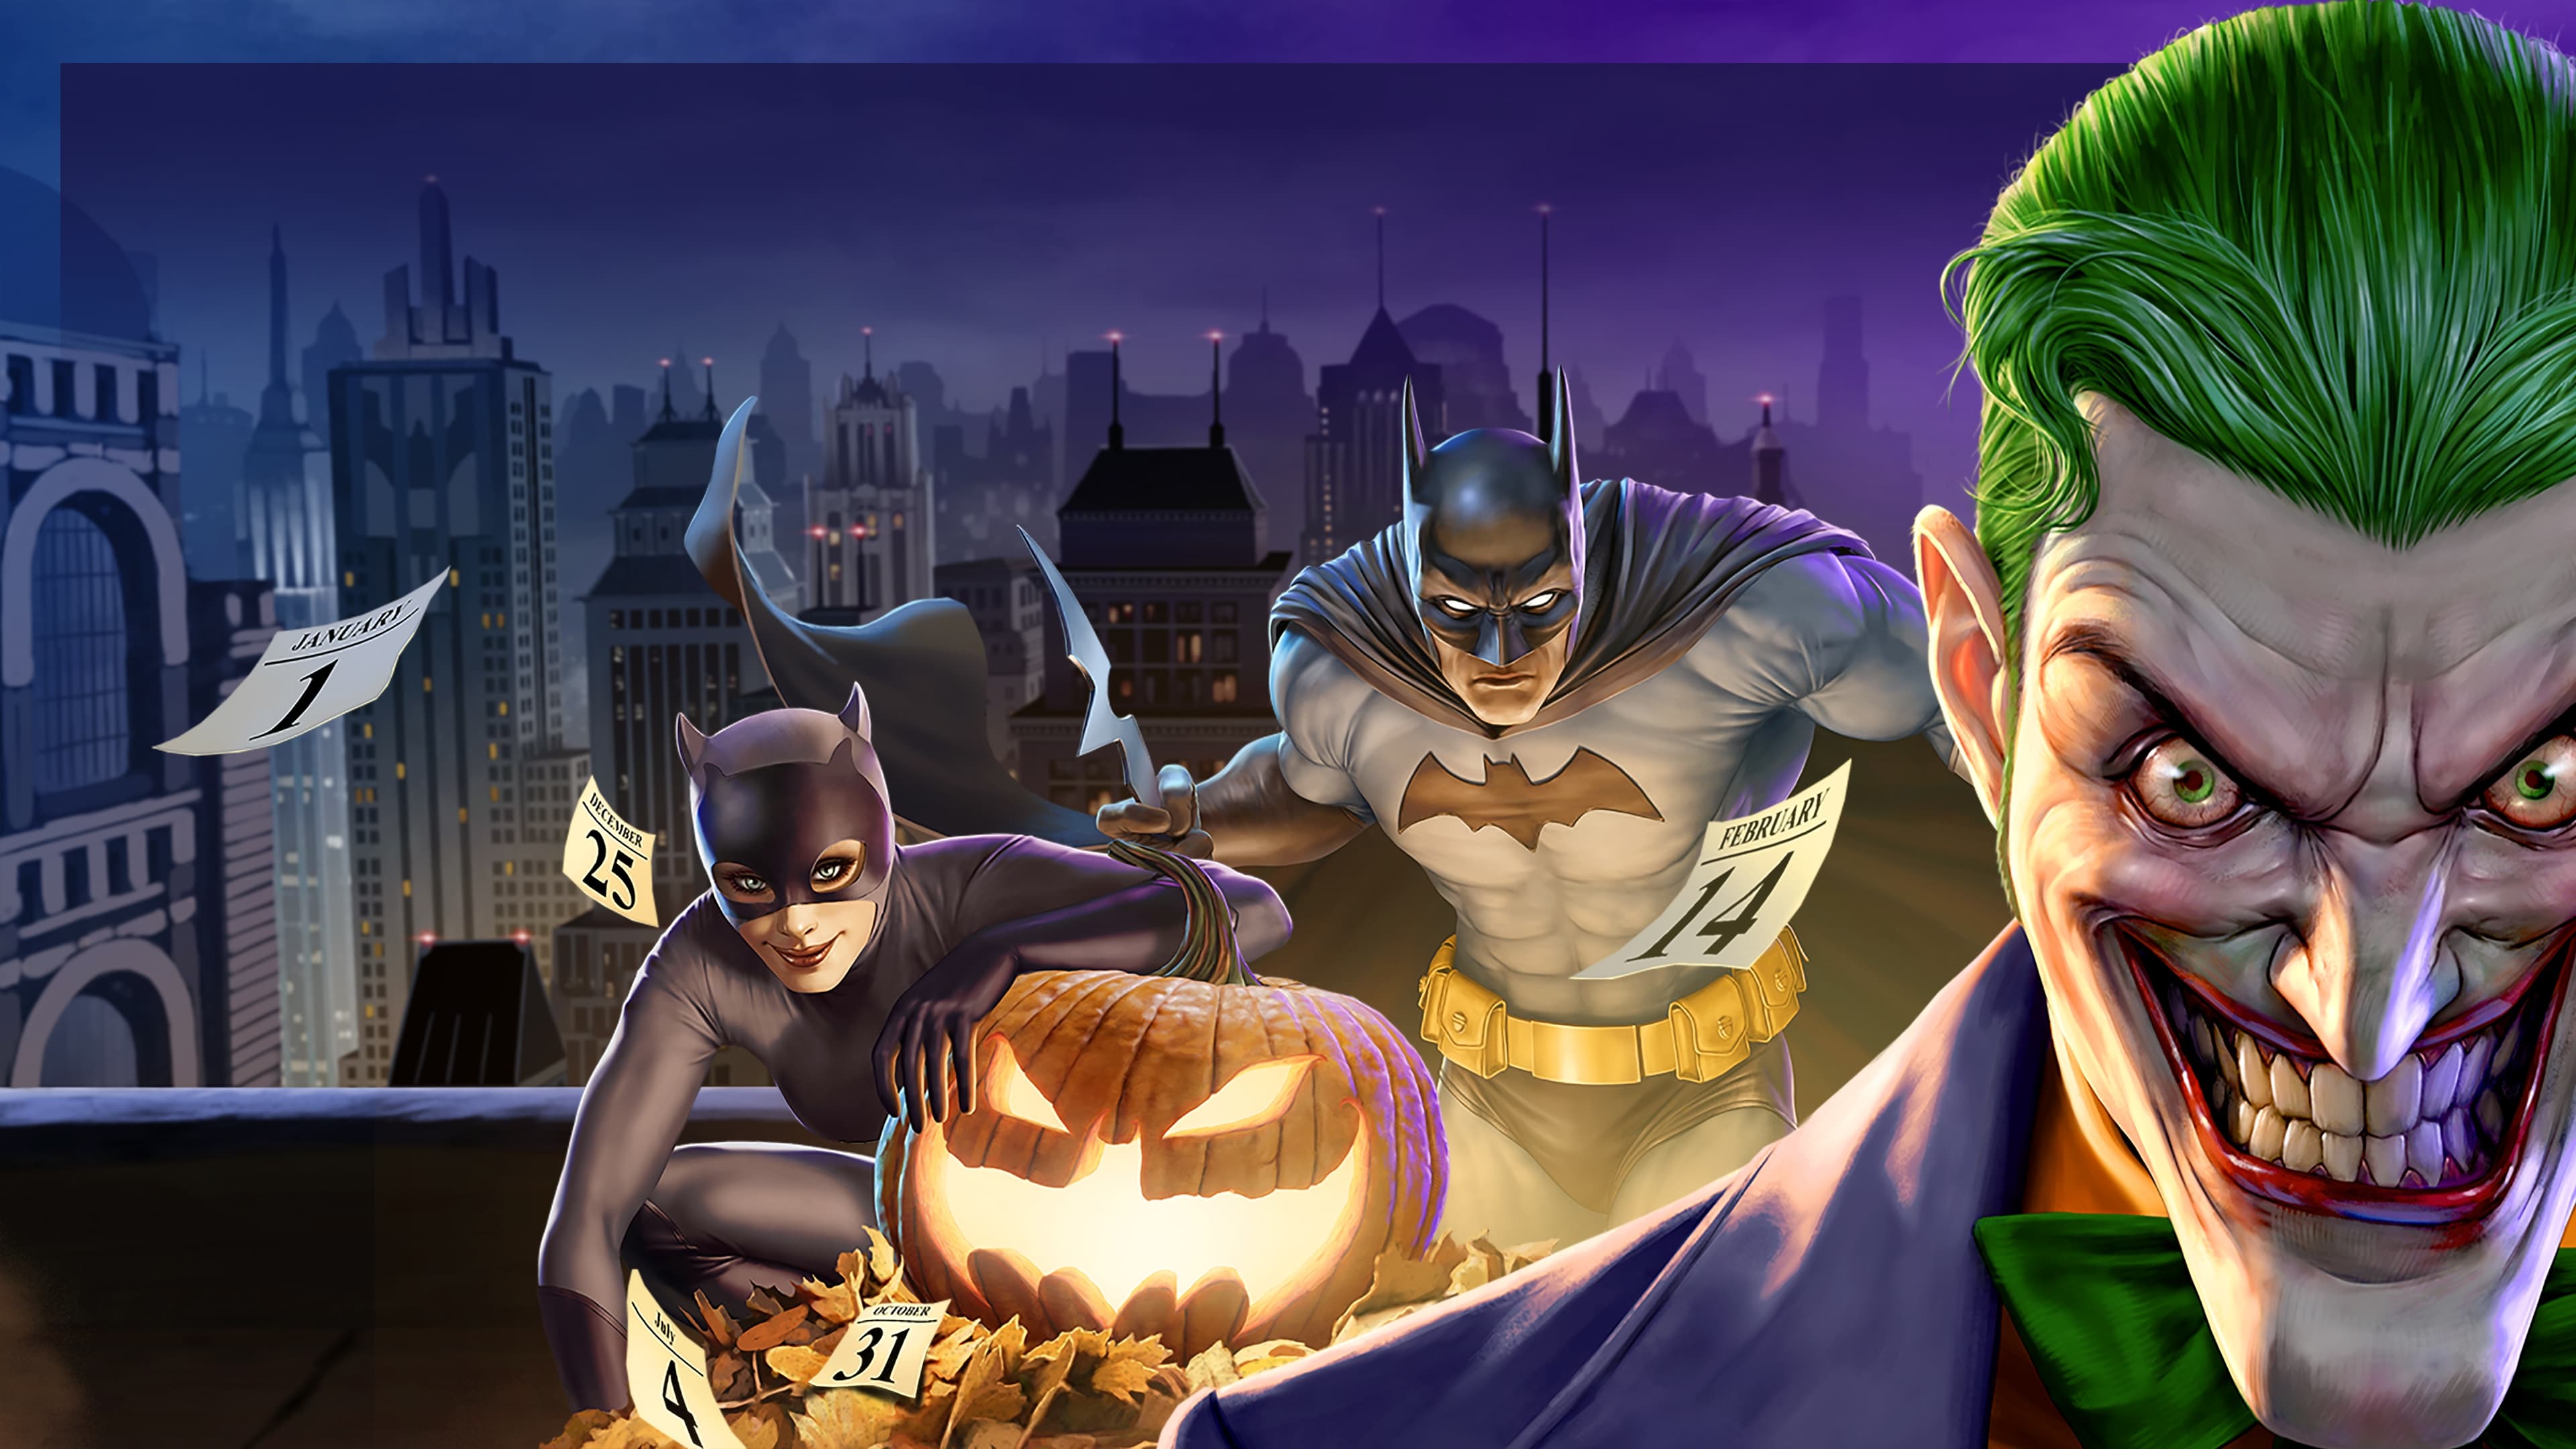 Los mejores fondos de pantalla de Batman: The Long Halloween Part One para la pantalla del teléfono